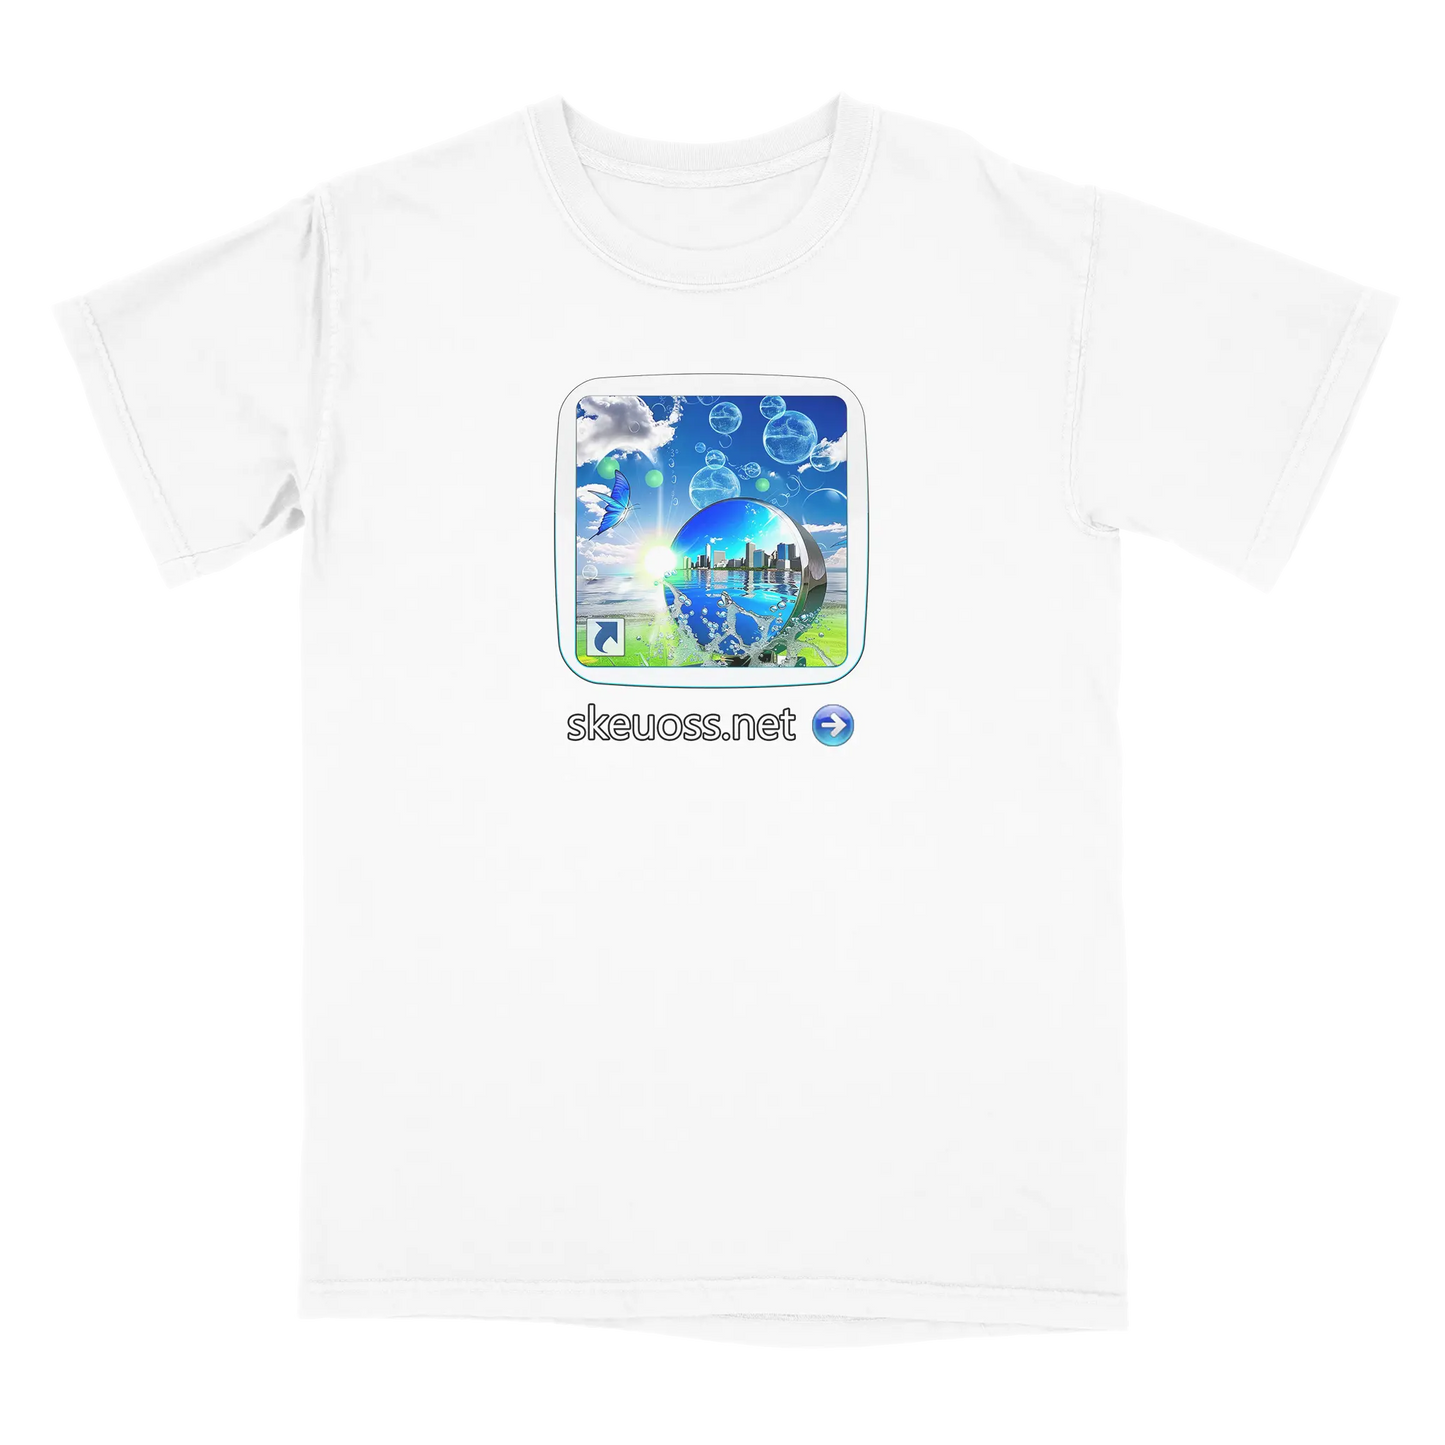 Frutiger Aero T-shirt - User Login Collection - User 396